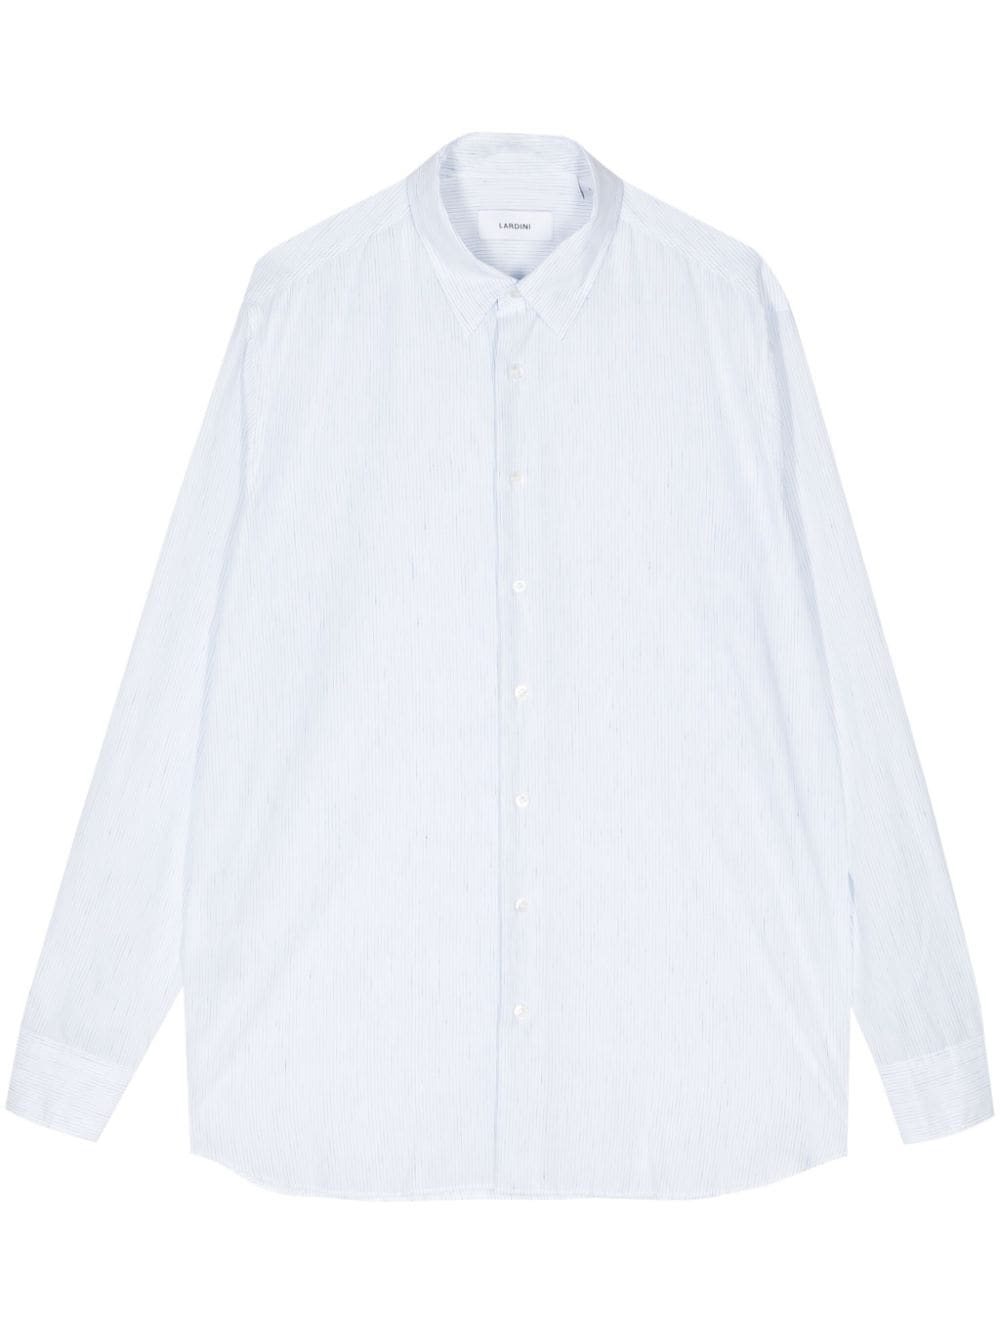 Lardini 细条纹长袖衬衫 In White